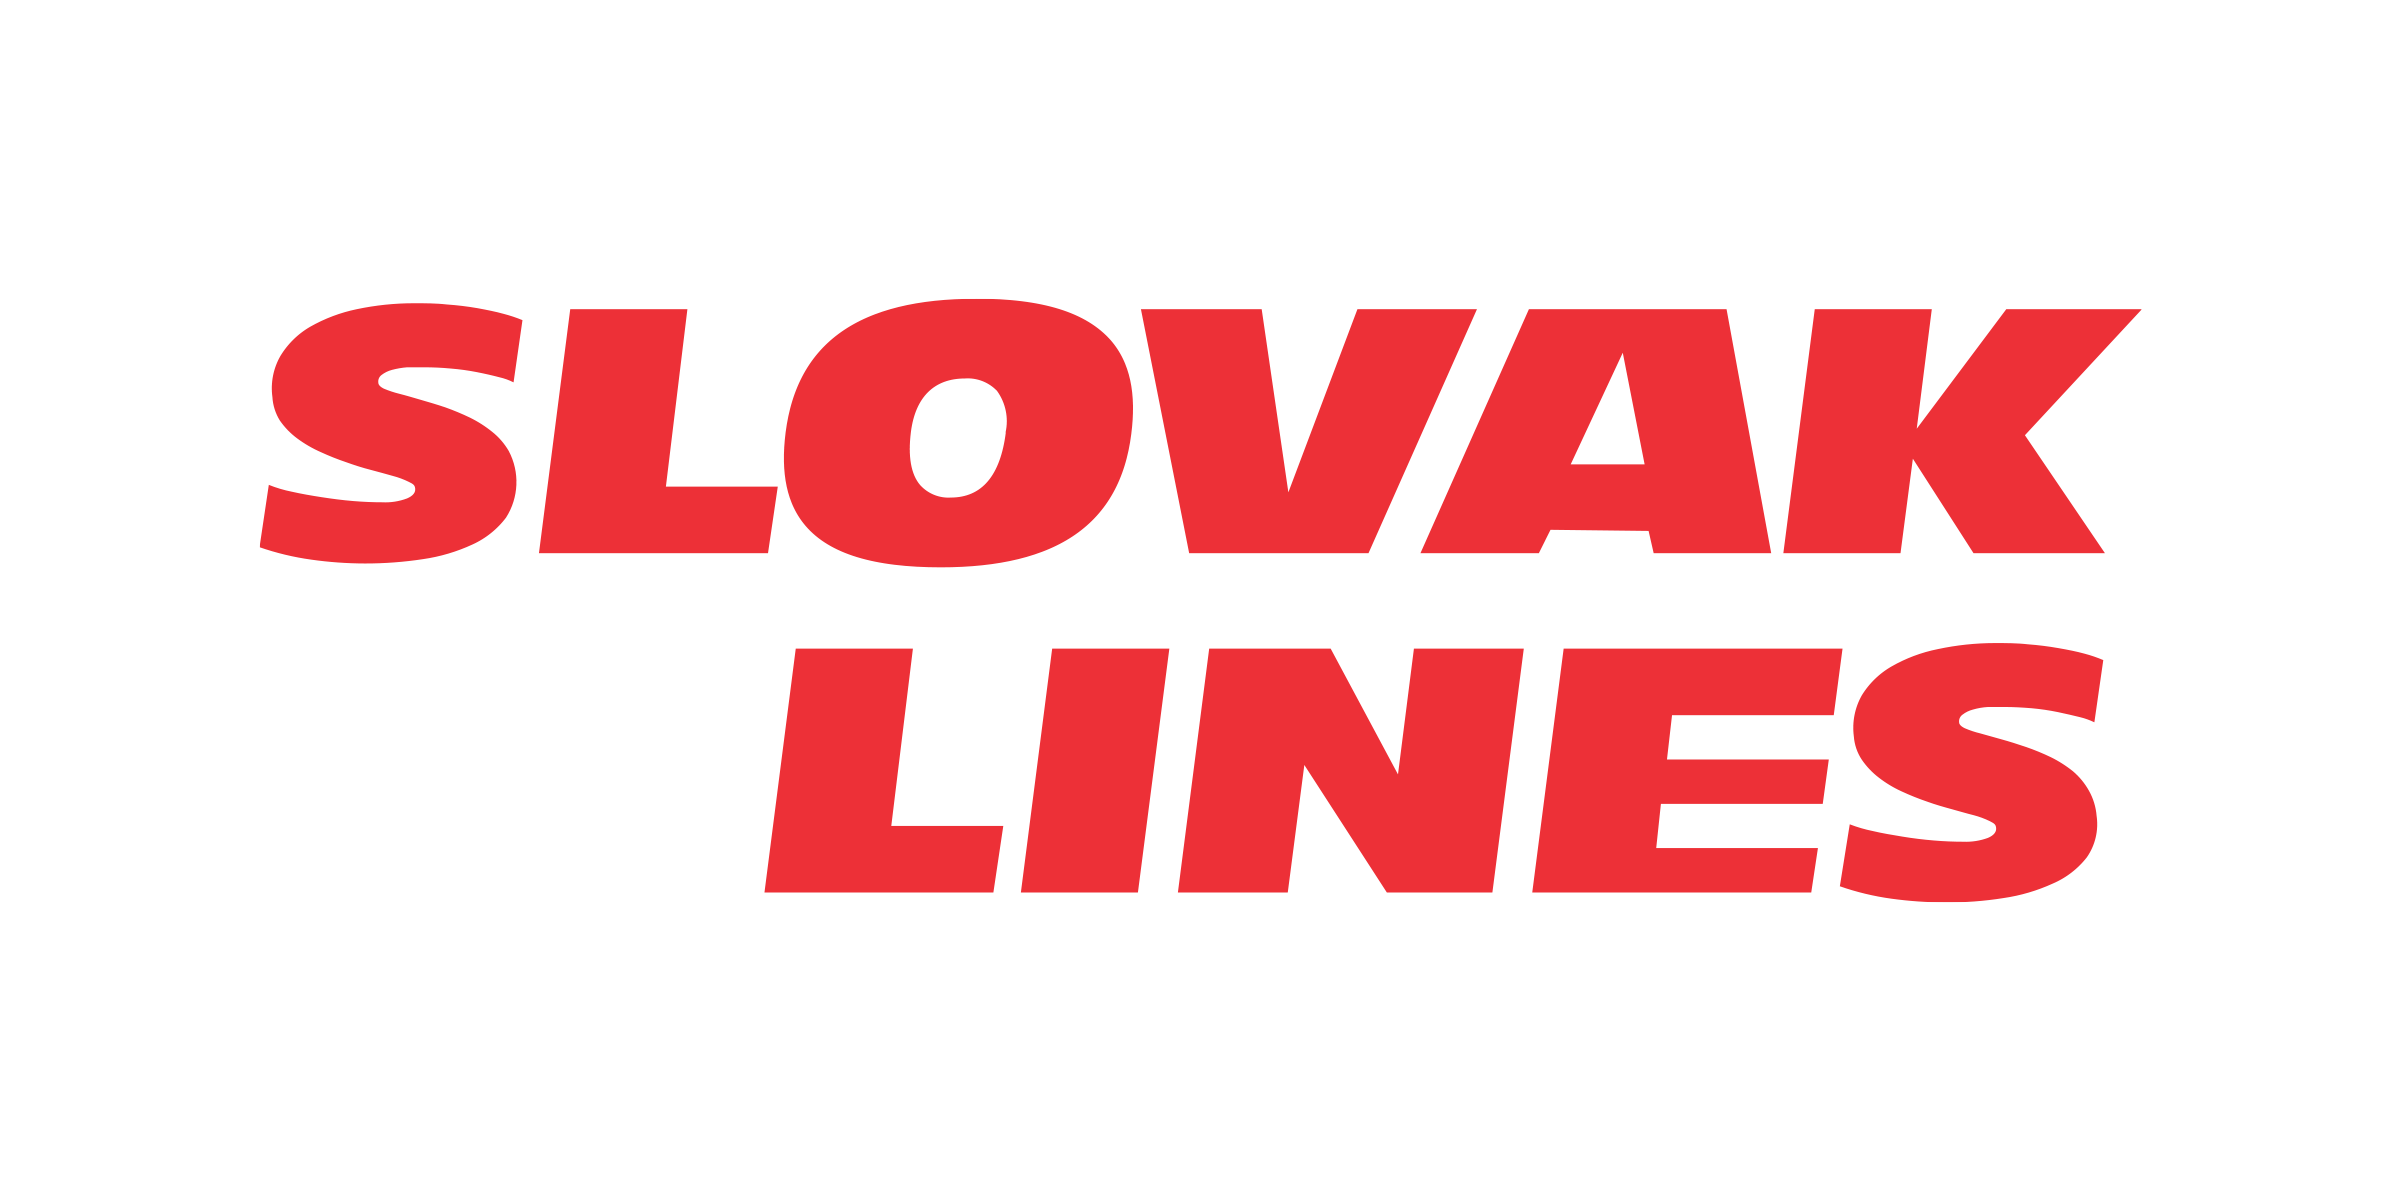 Slovak Lines